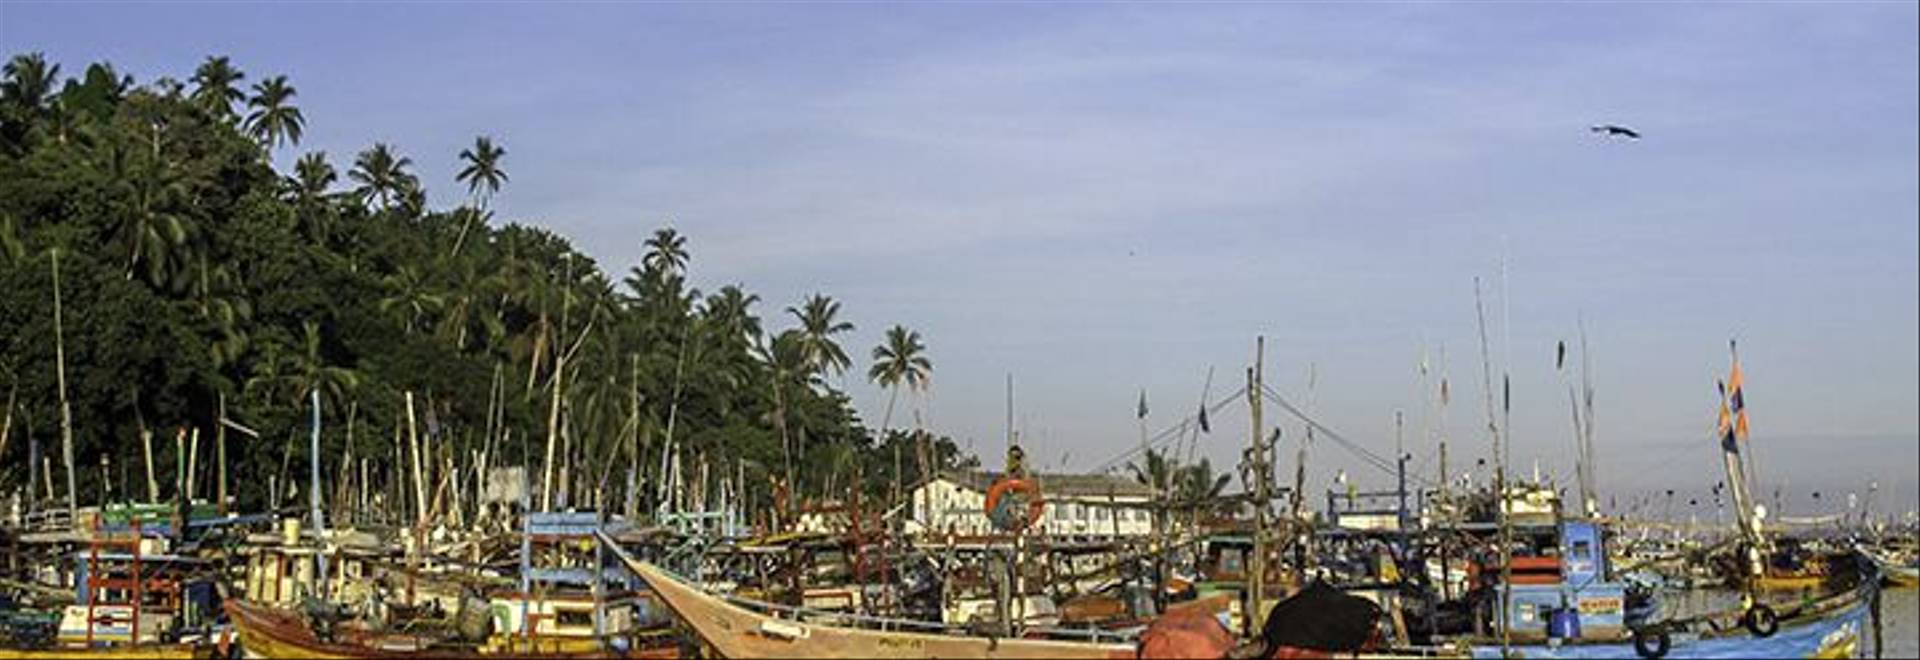 Sri Lanka Mirissa Beach Shore Boats_19034878284-1.jpg